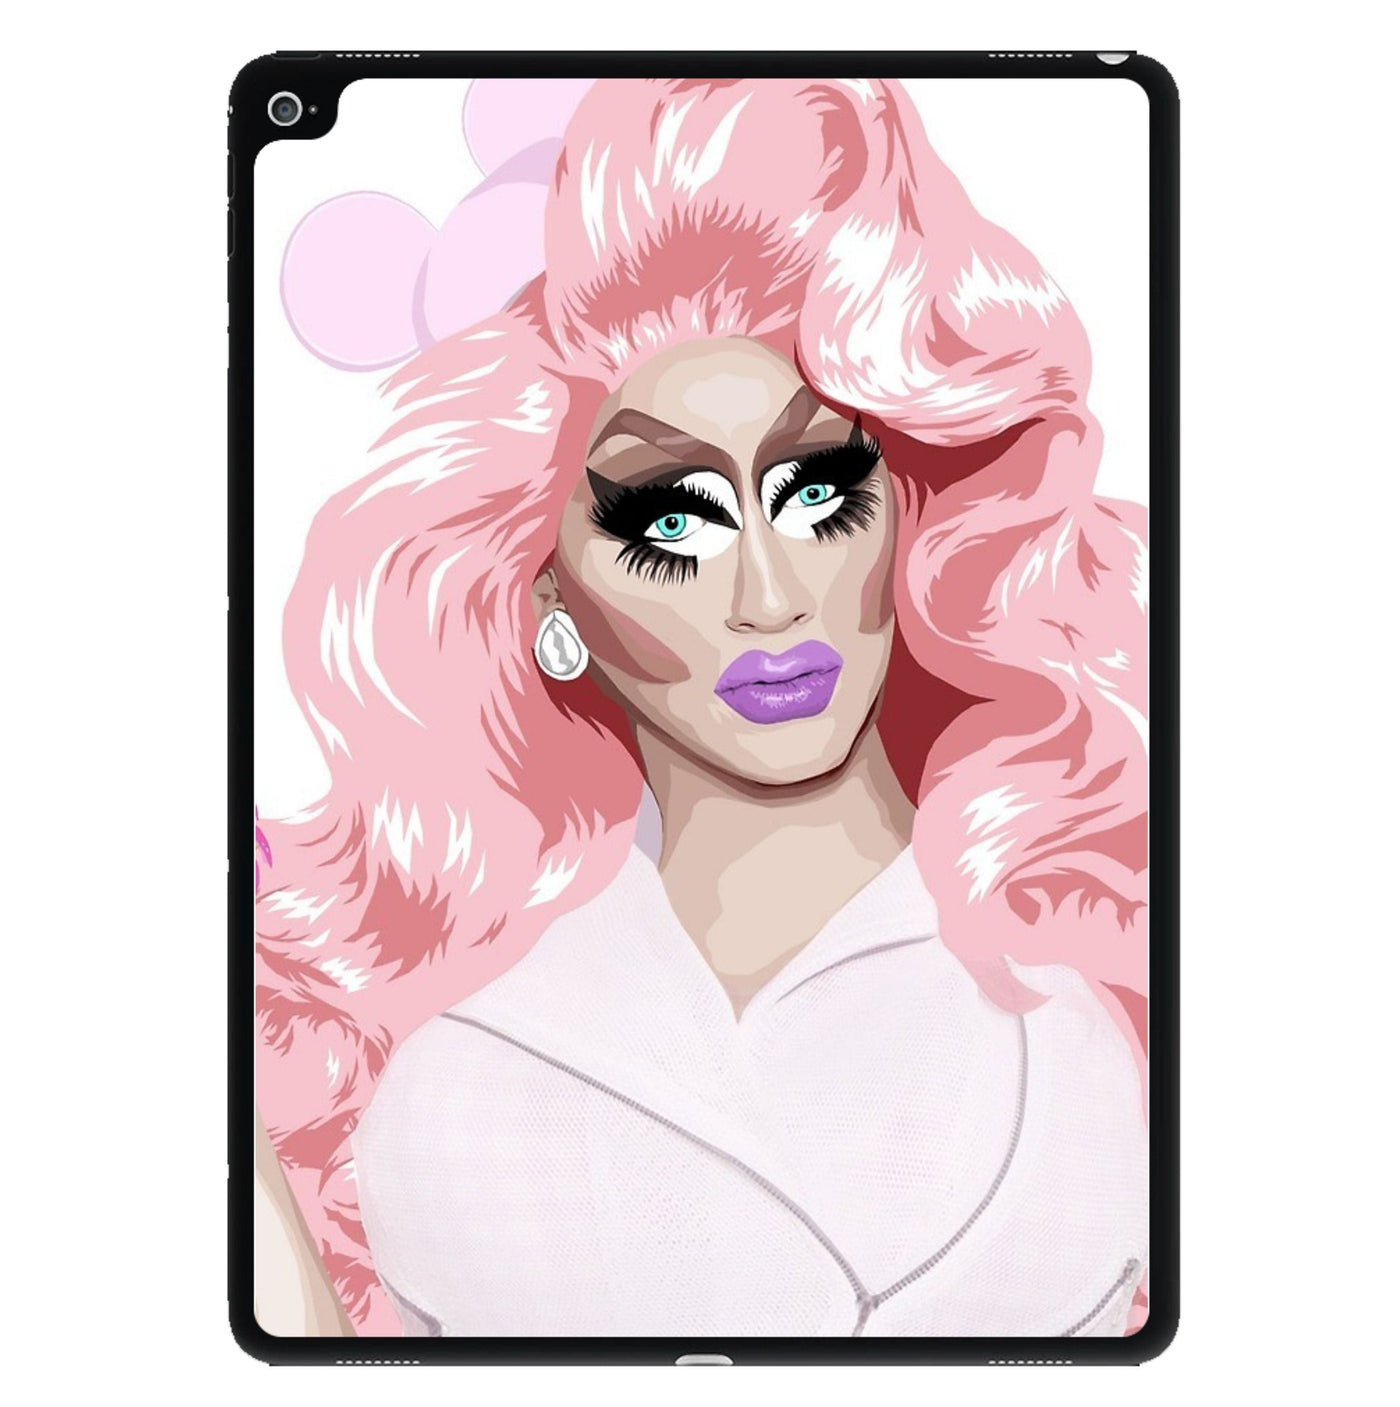 White Trixie Mattel - RuPaul's Drag Race iPad Case